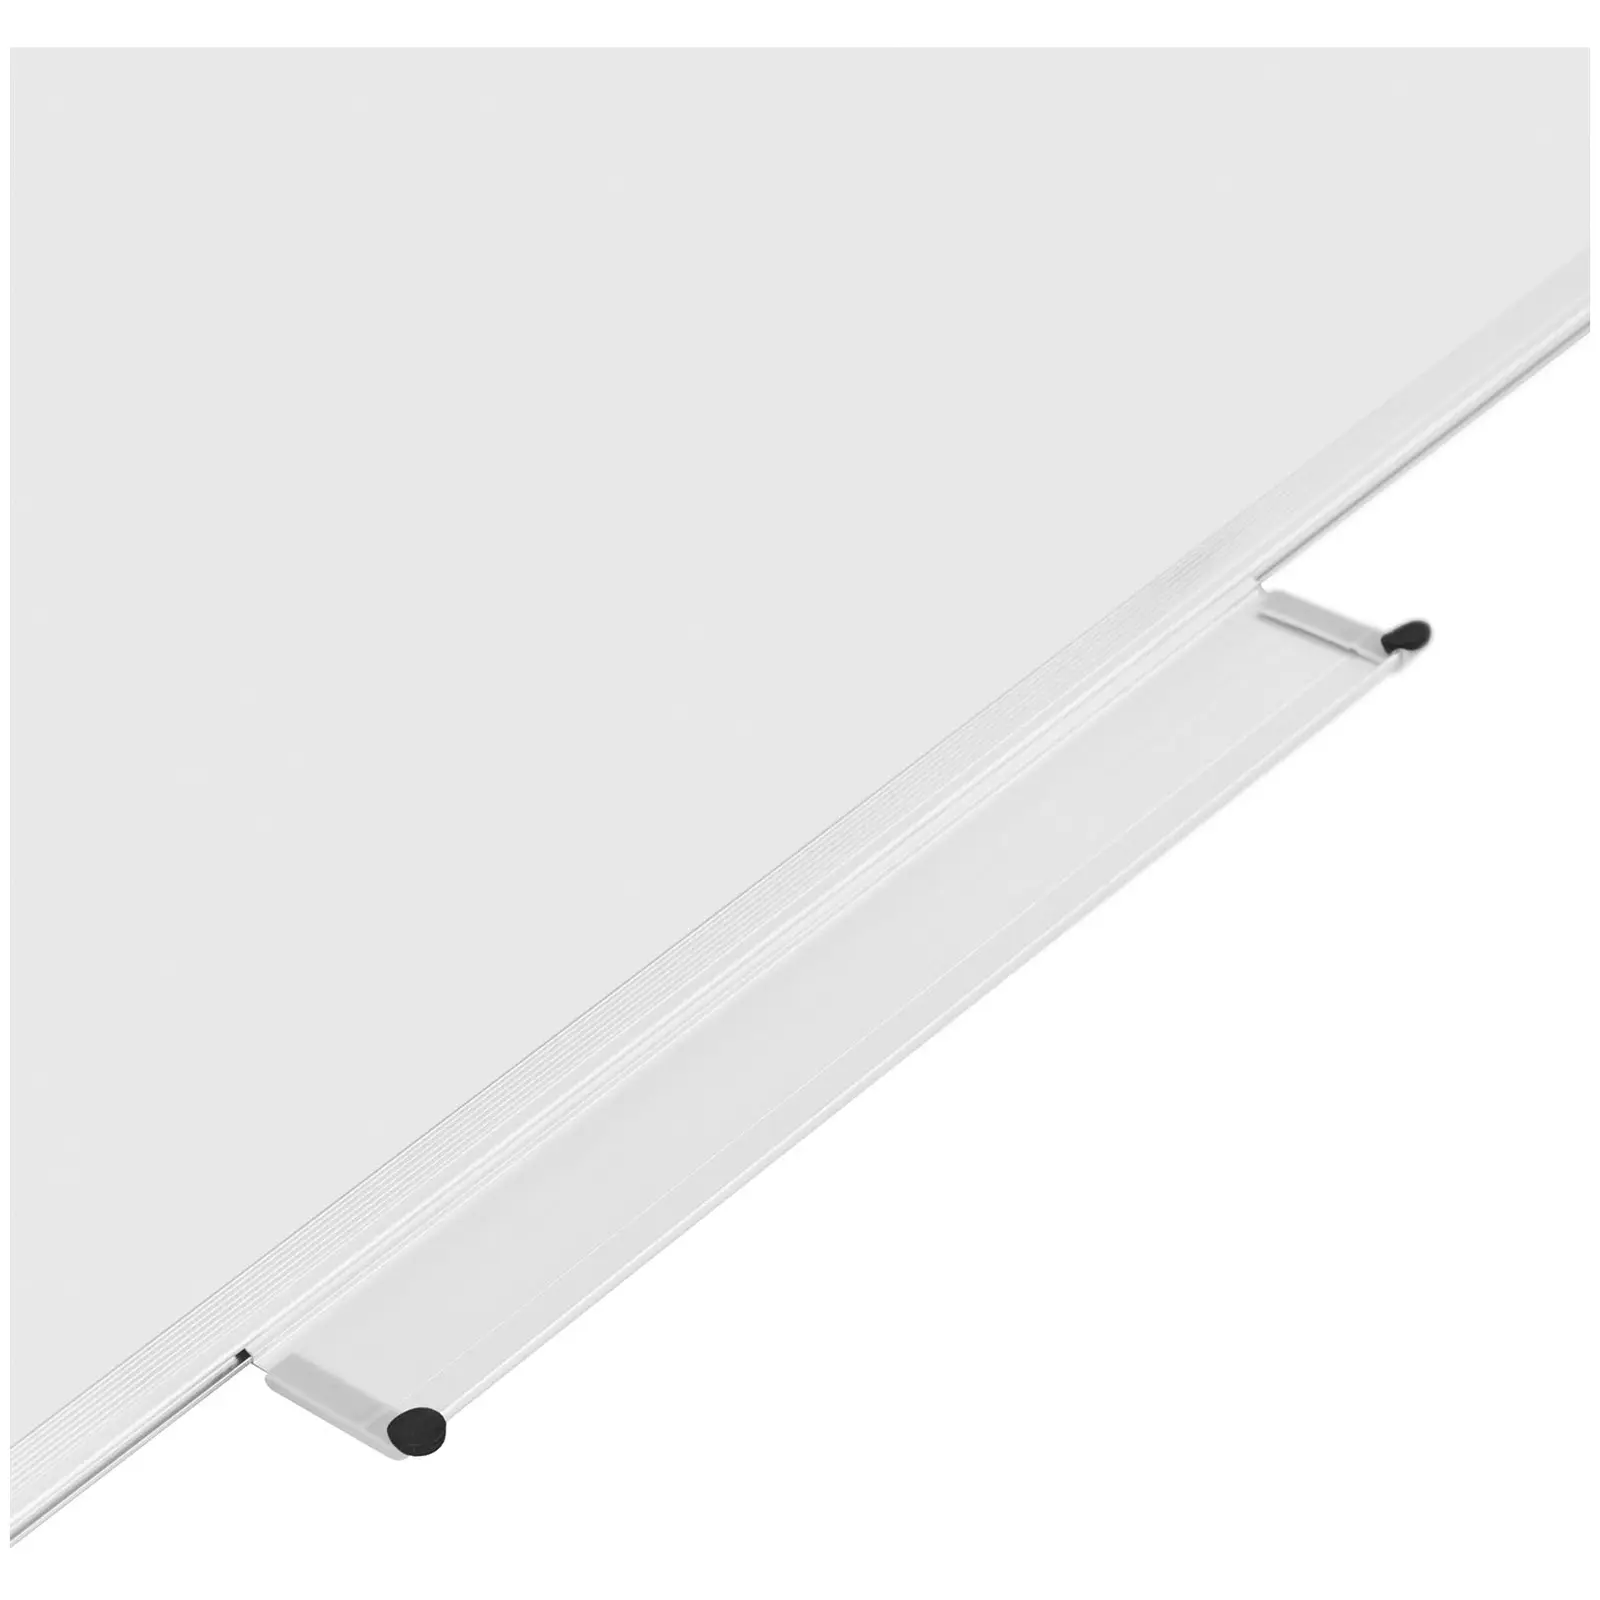 Whiteboard - 60 x 45 cm - magnetická